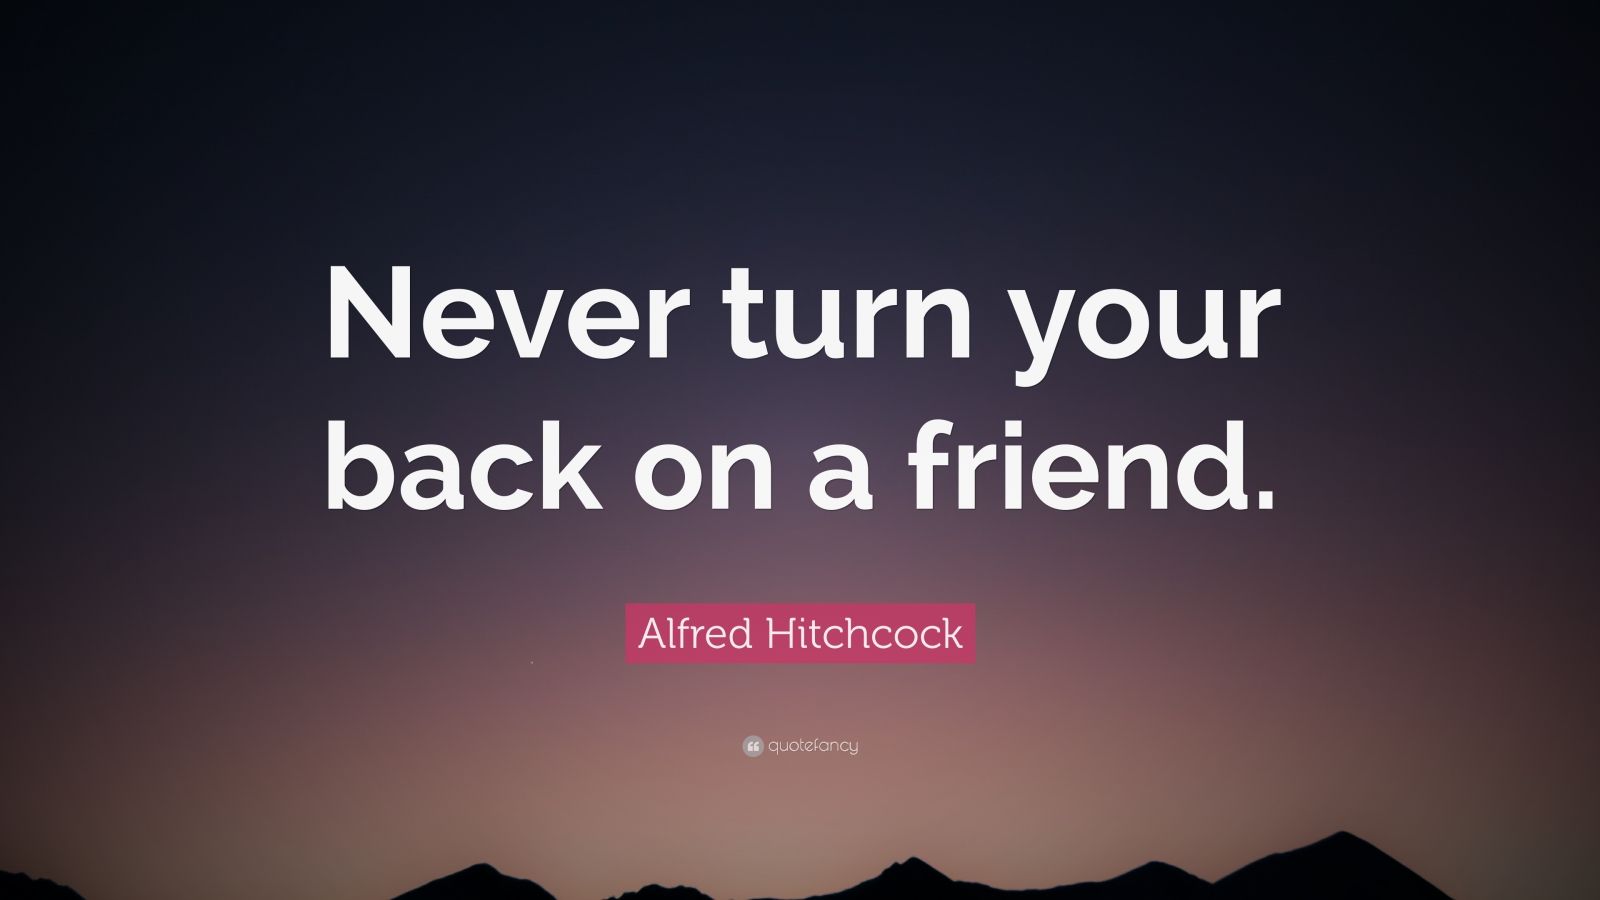 alfred hitchcock presents backwards turn backwards